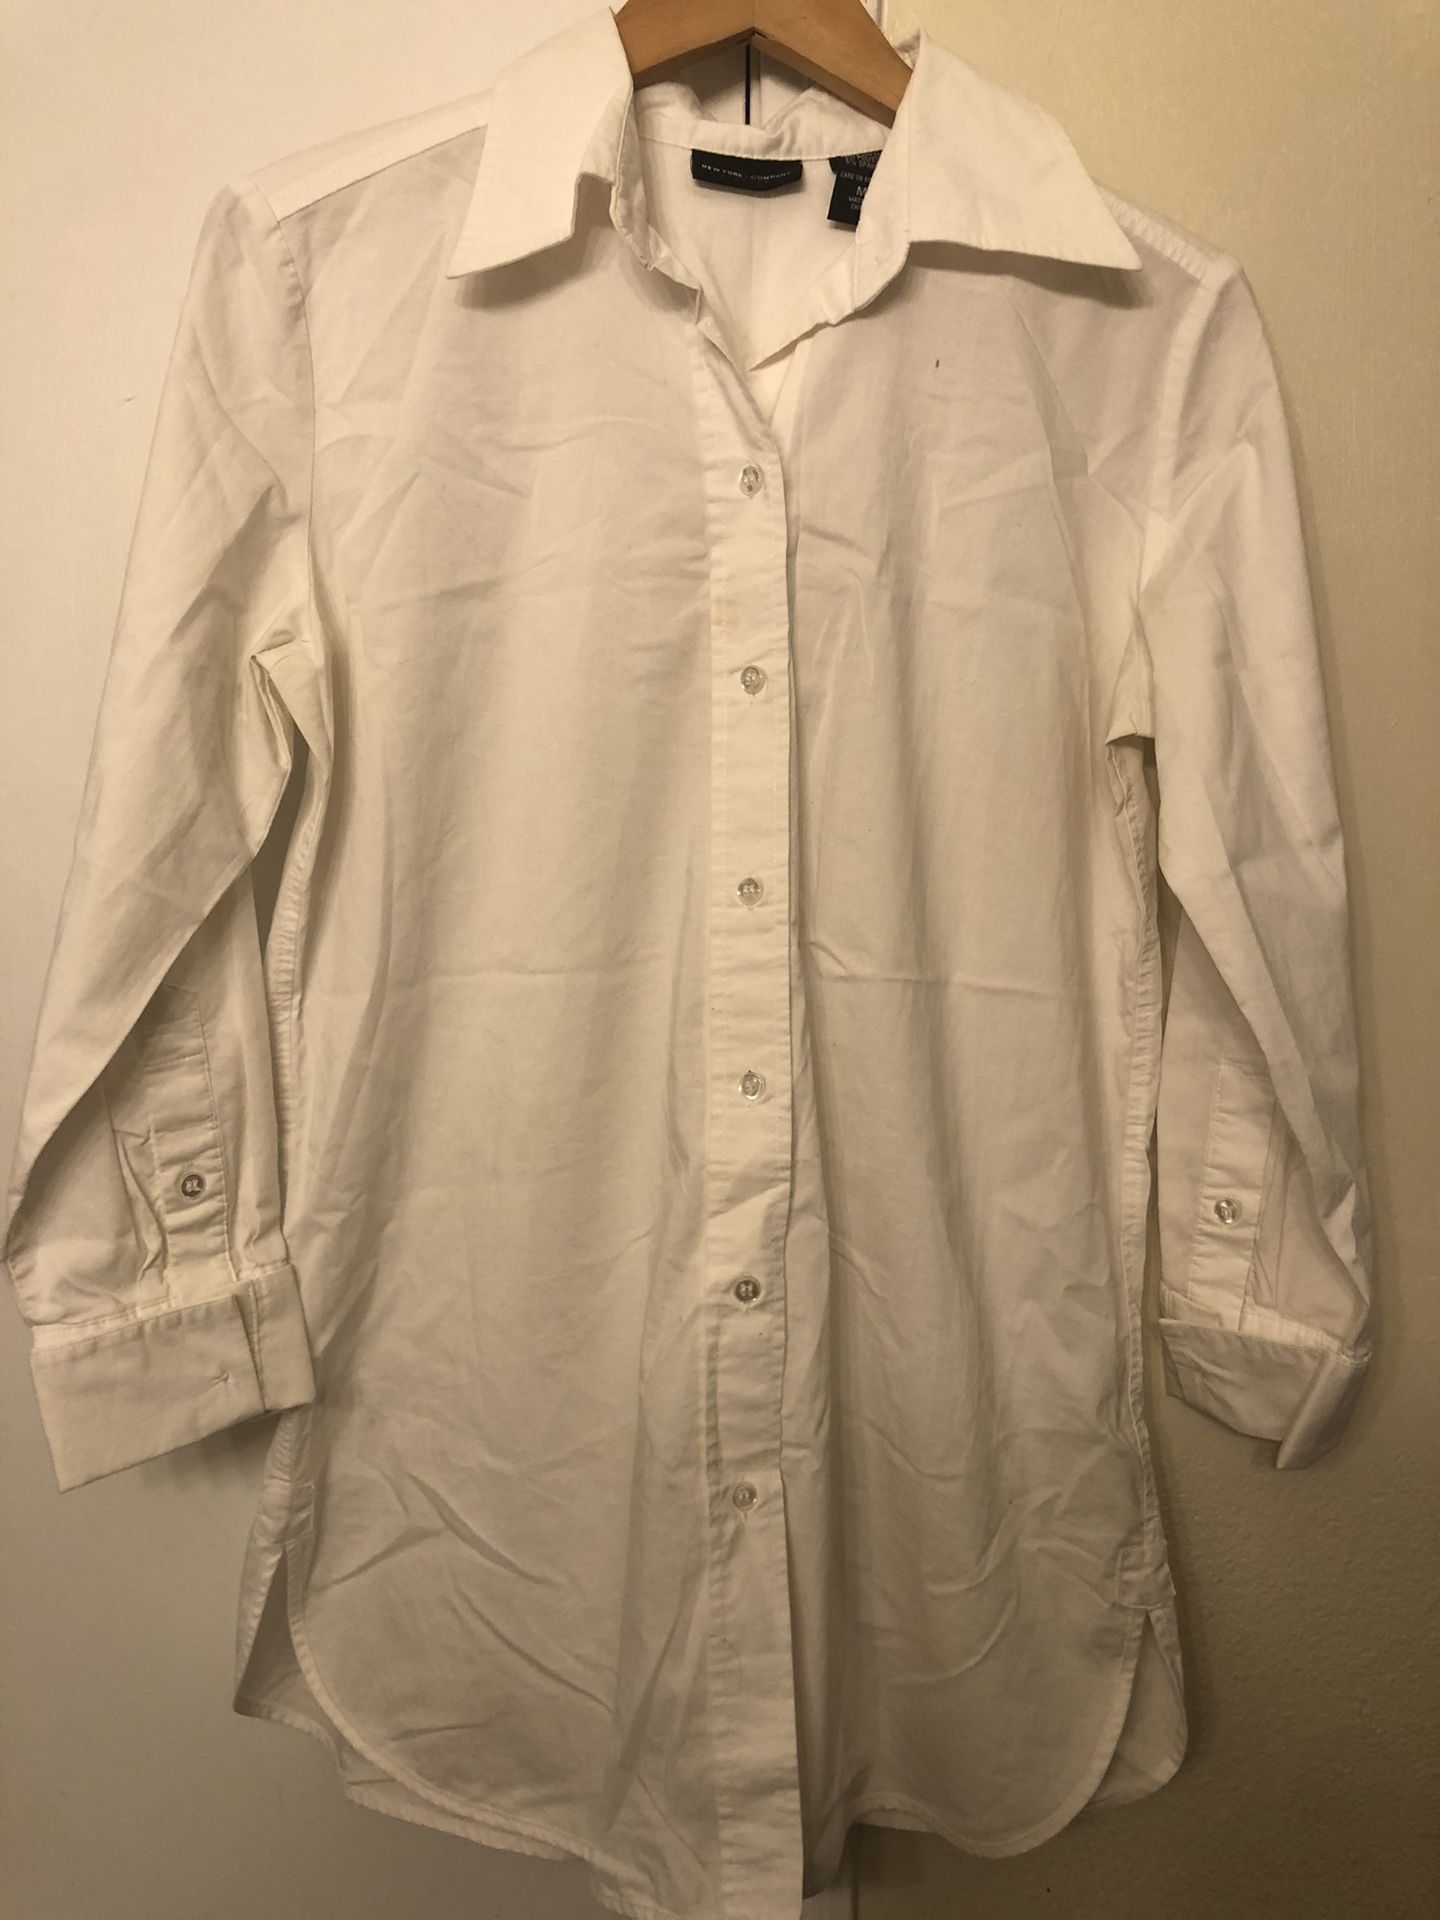 New York & Company Medium White Dress Shirt